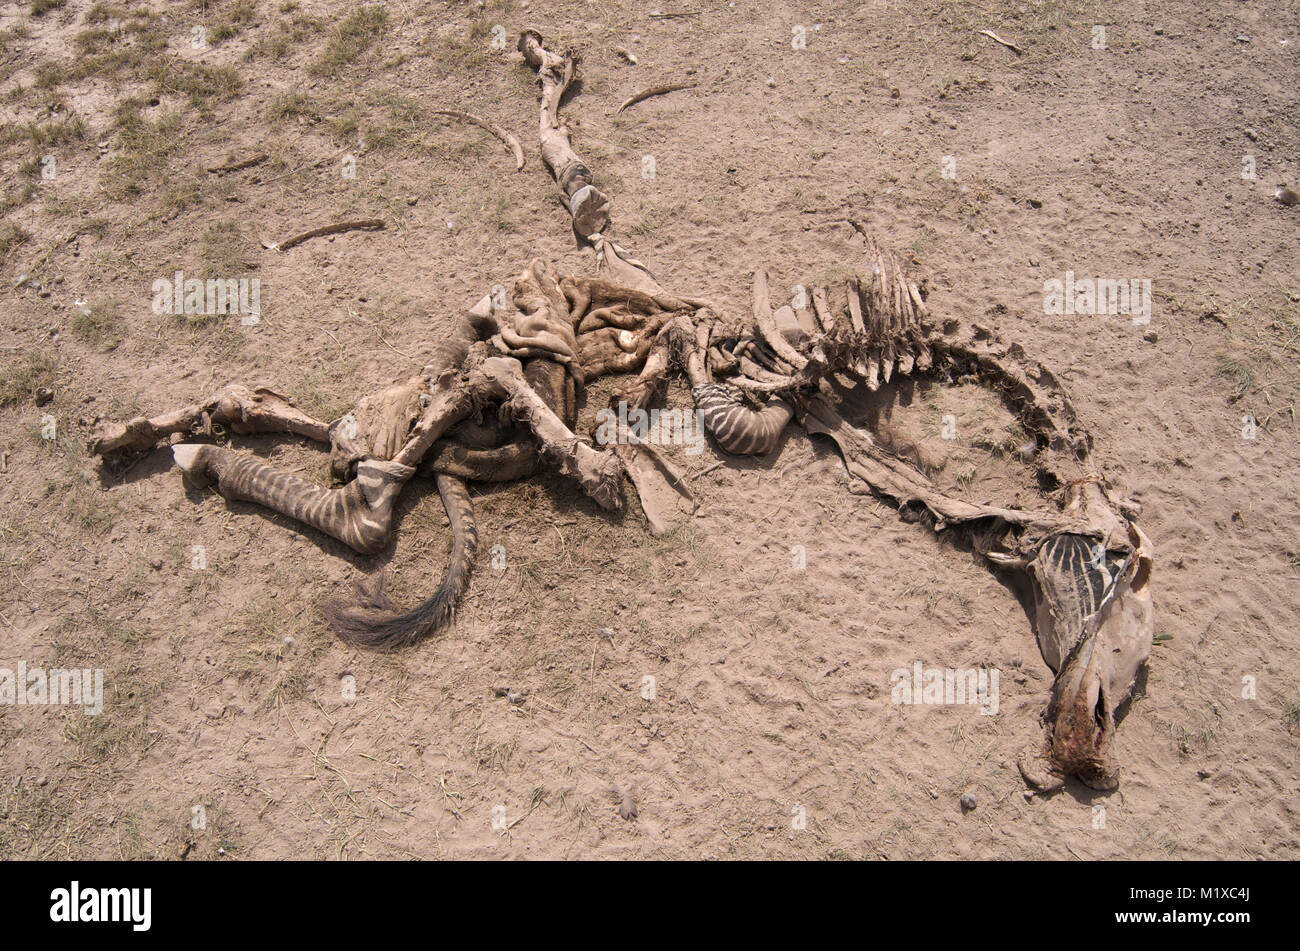 Zebra skeleton lying on dusty earth during drought in Amboseli, Kenya. Stock Photo